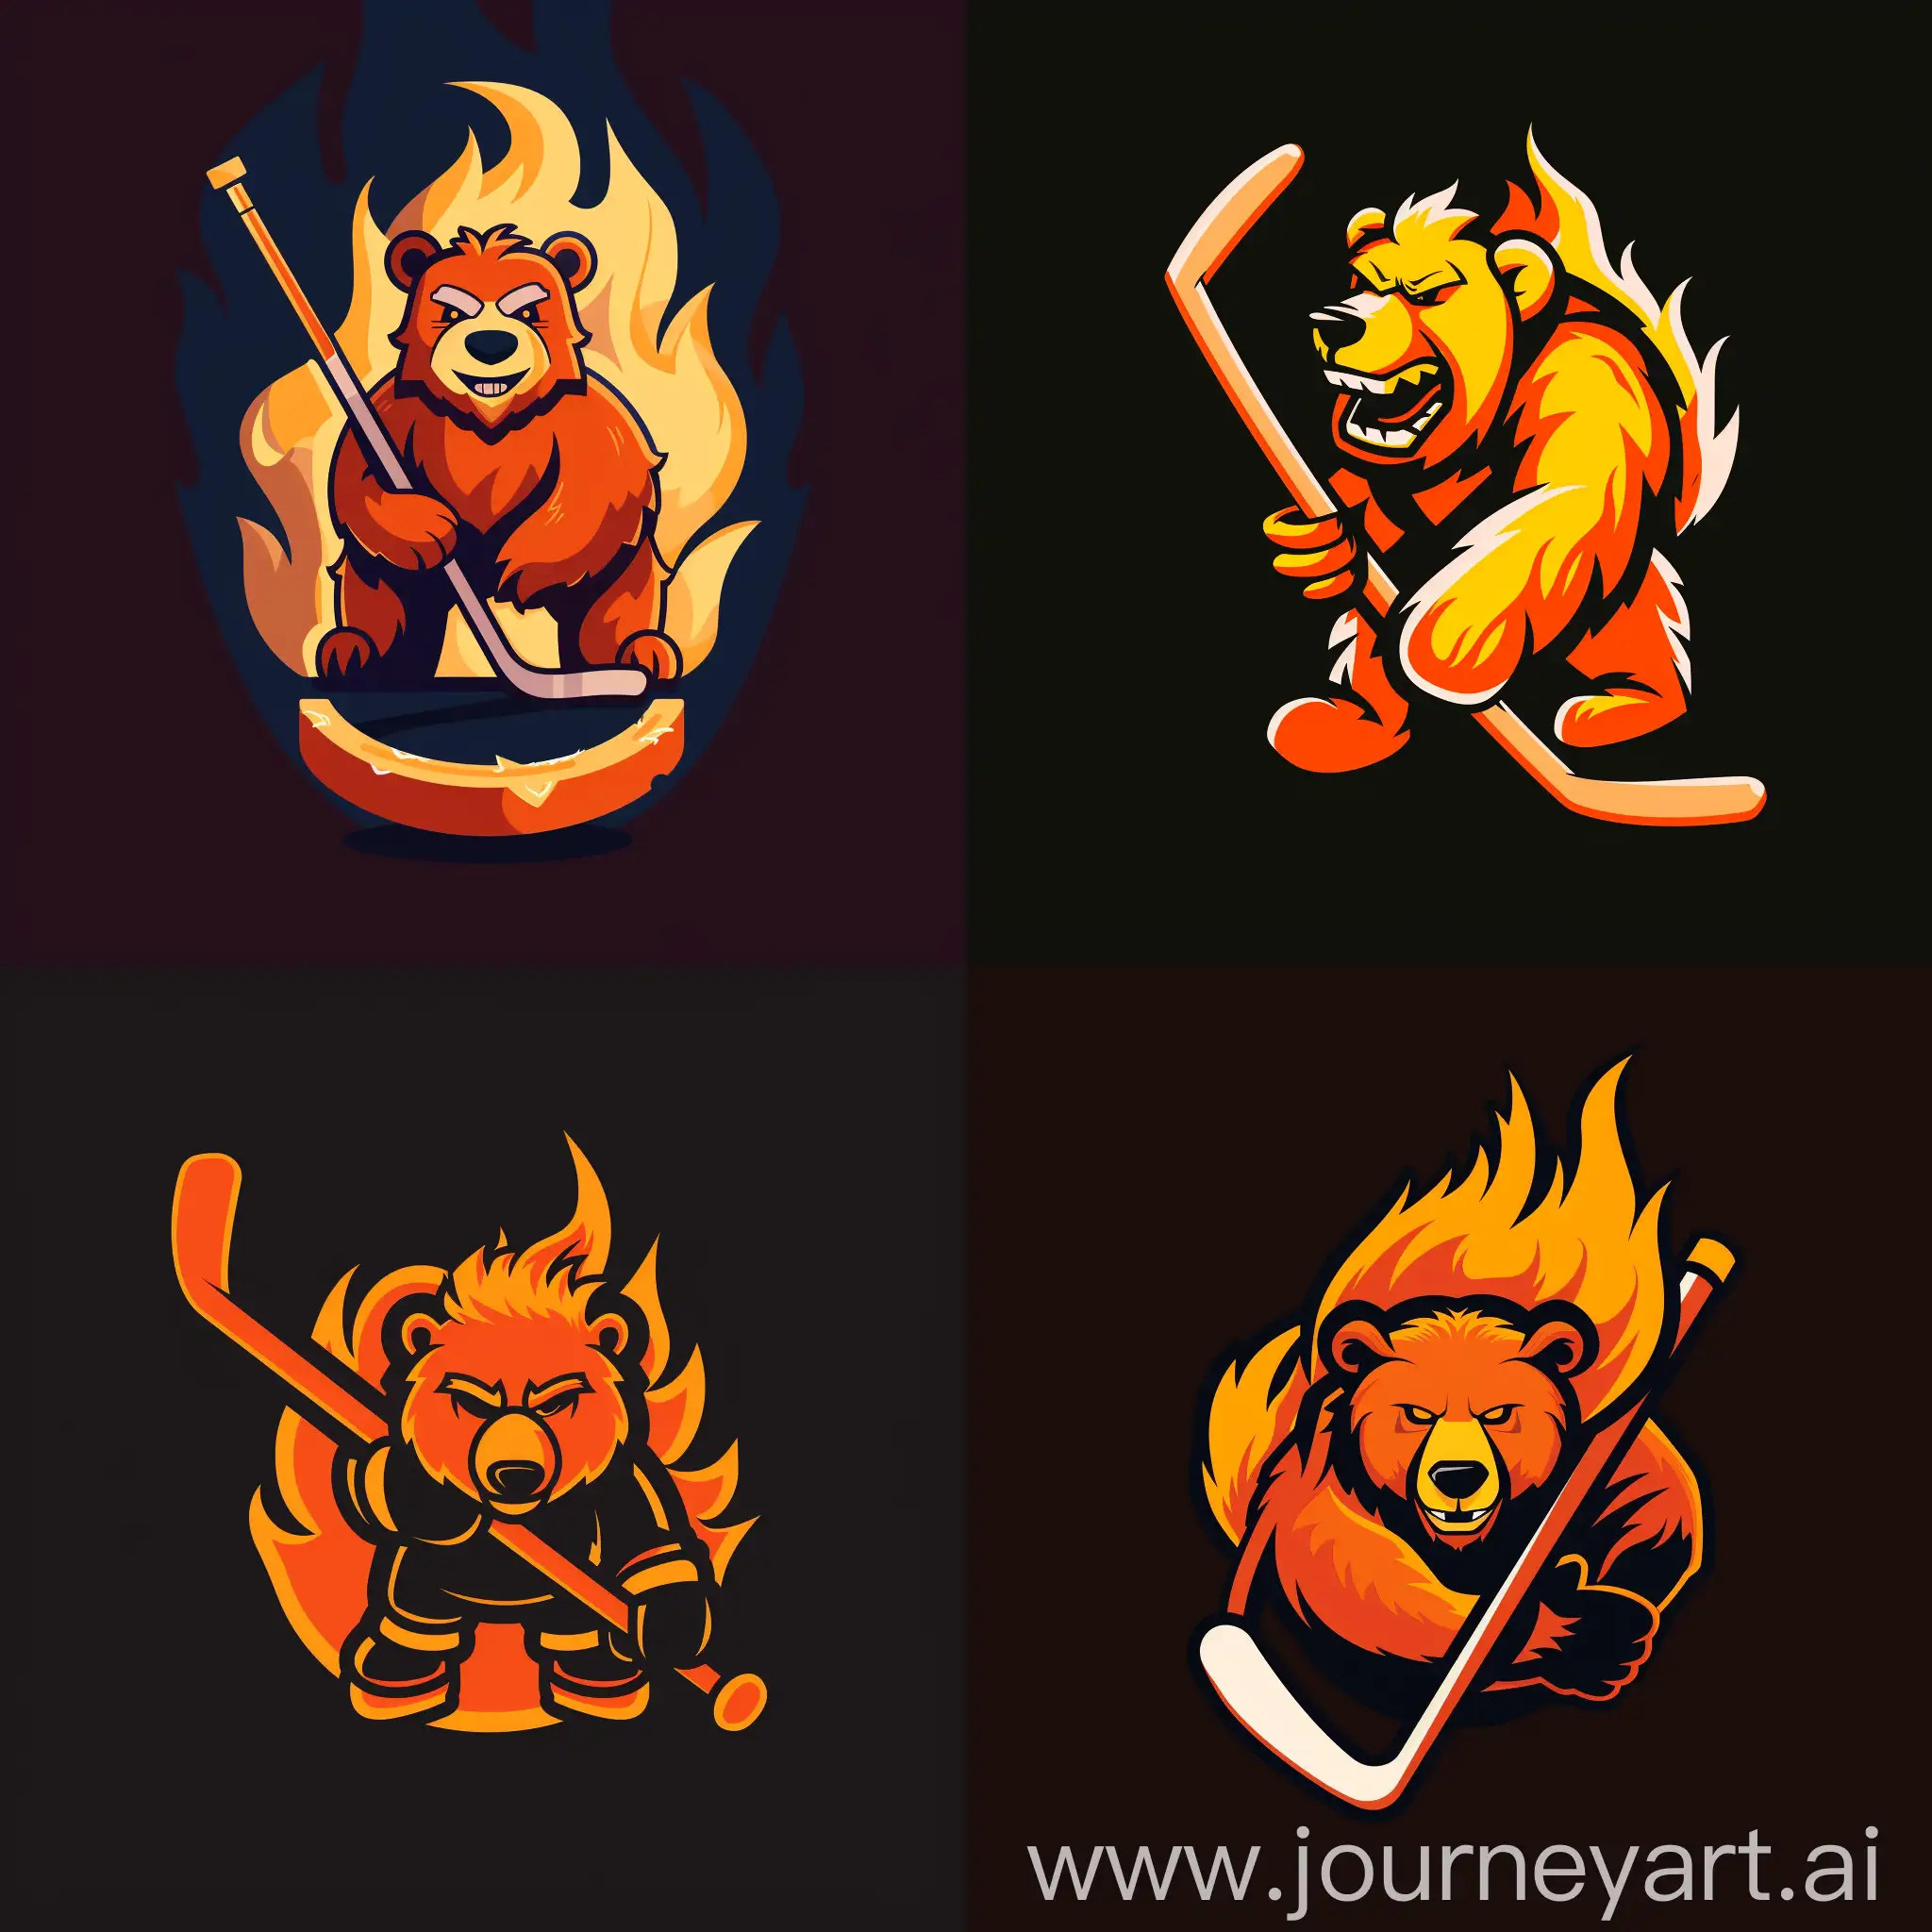 Fire-Bear-Mascot-Holding-Hockey-Stick-in-PC-Art